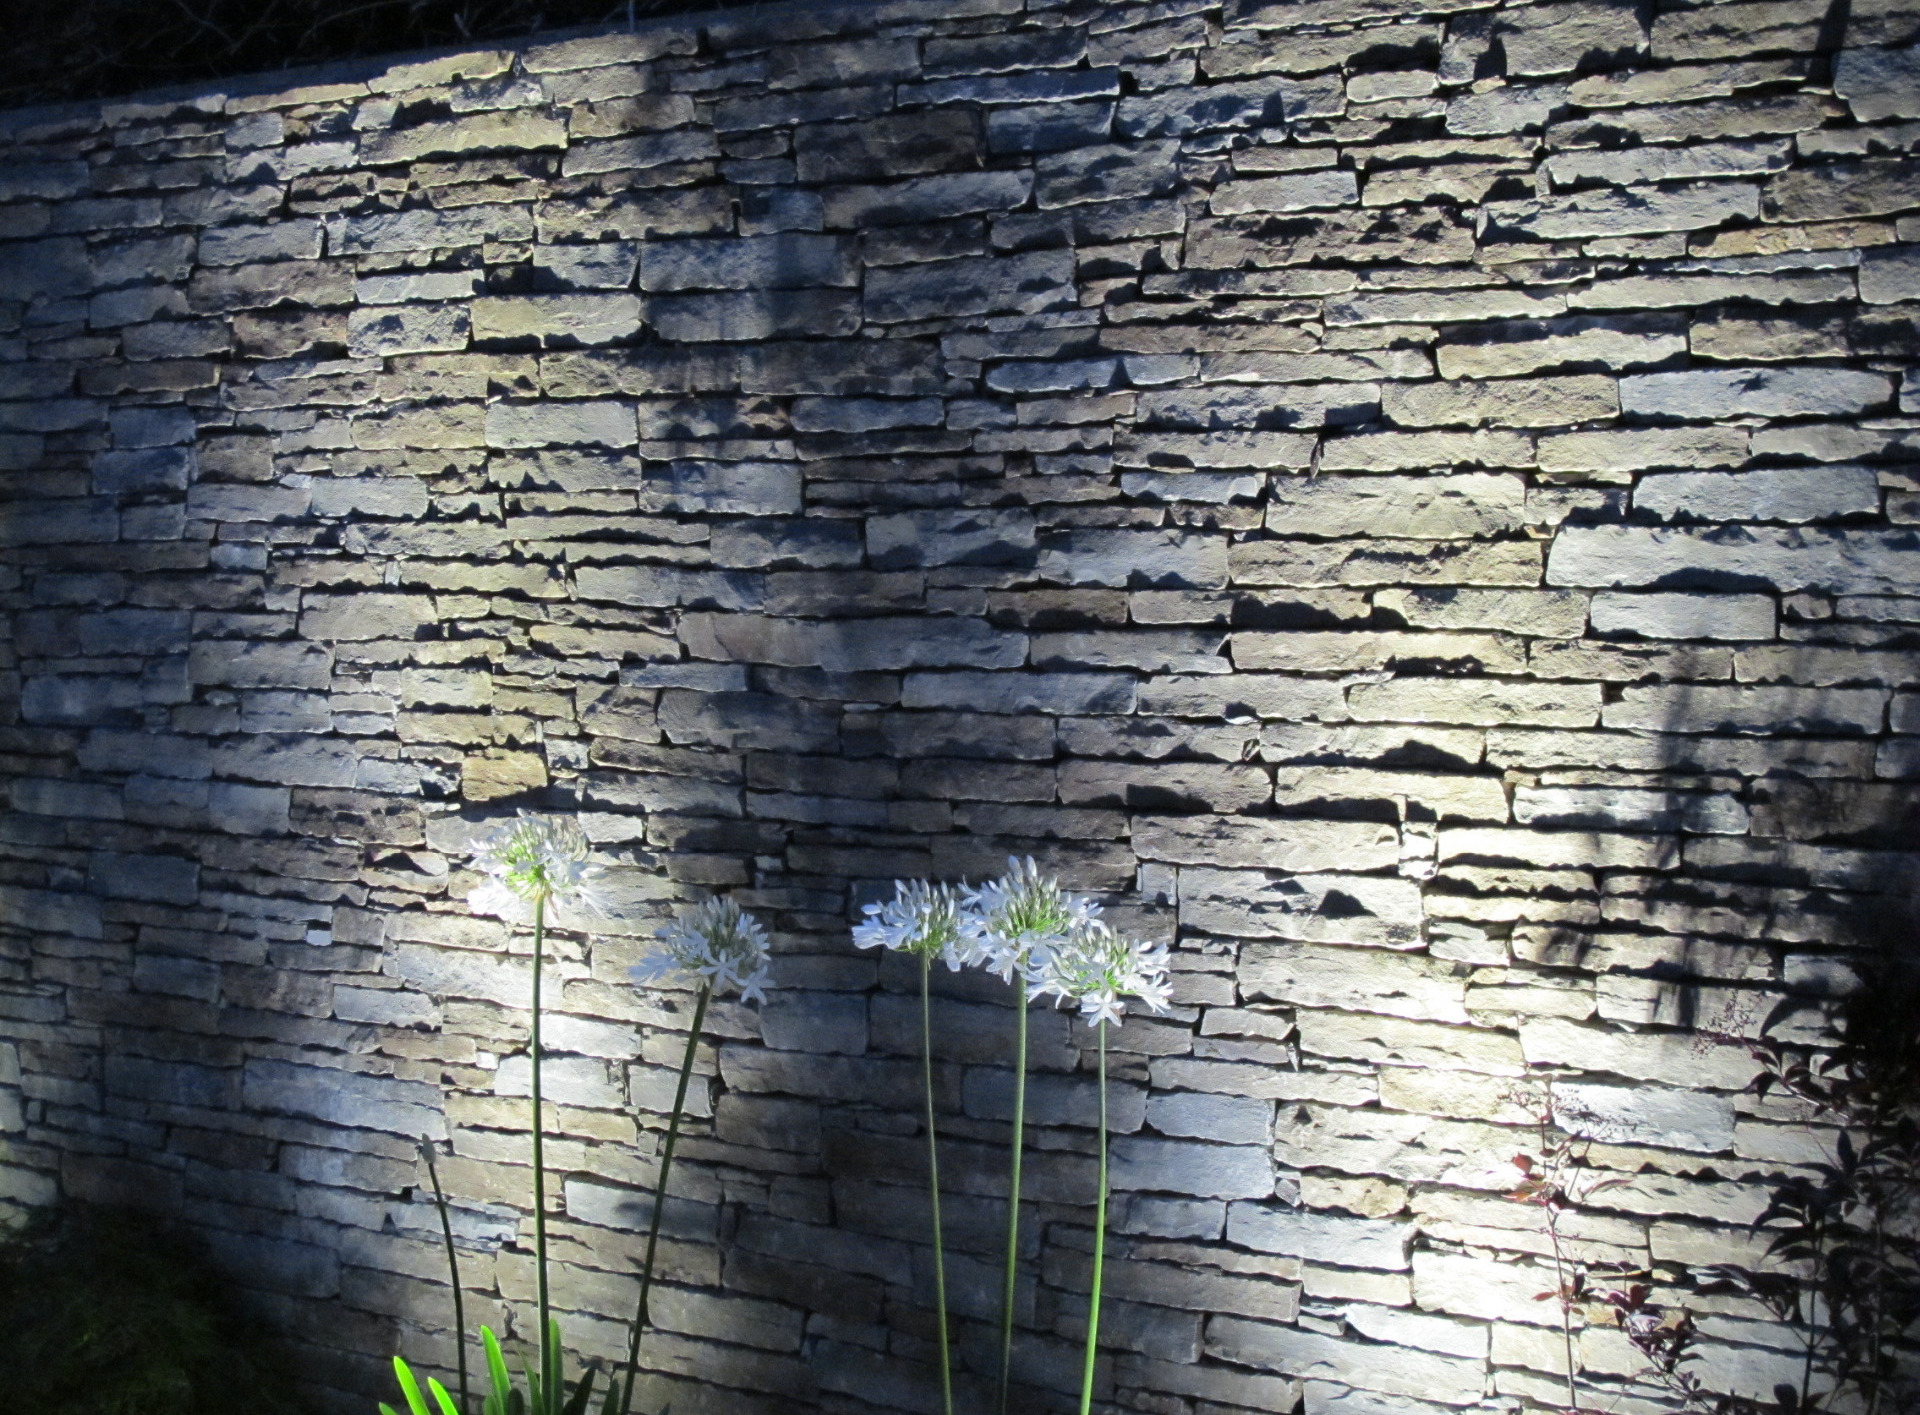 LED Outdoor Garden Lighting in Dublin 18 | Design & Installation by Owen Chubb Landscapers